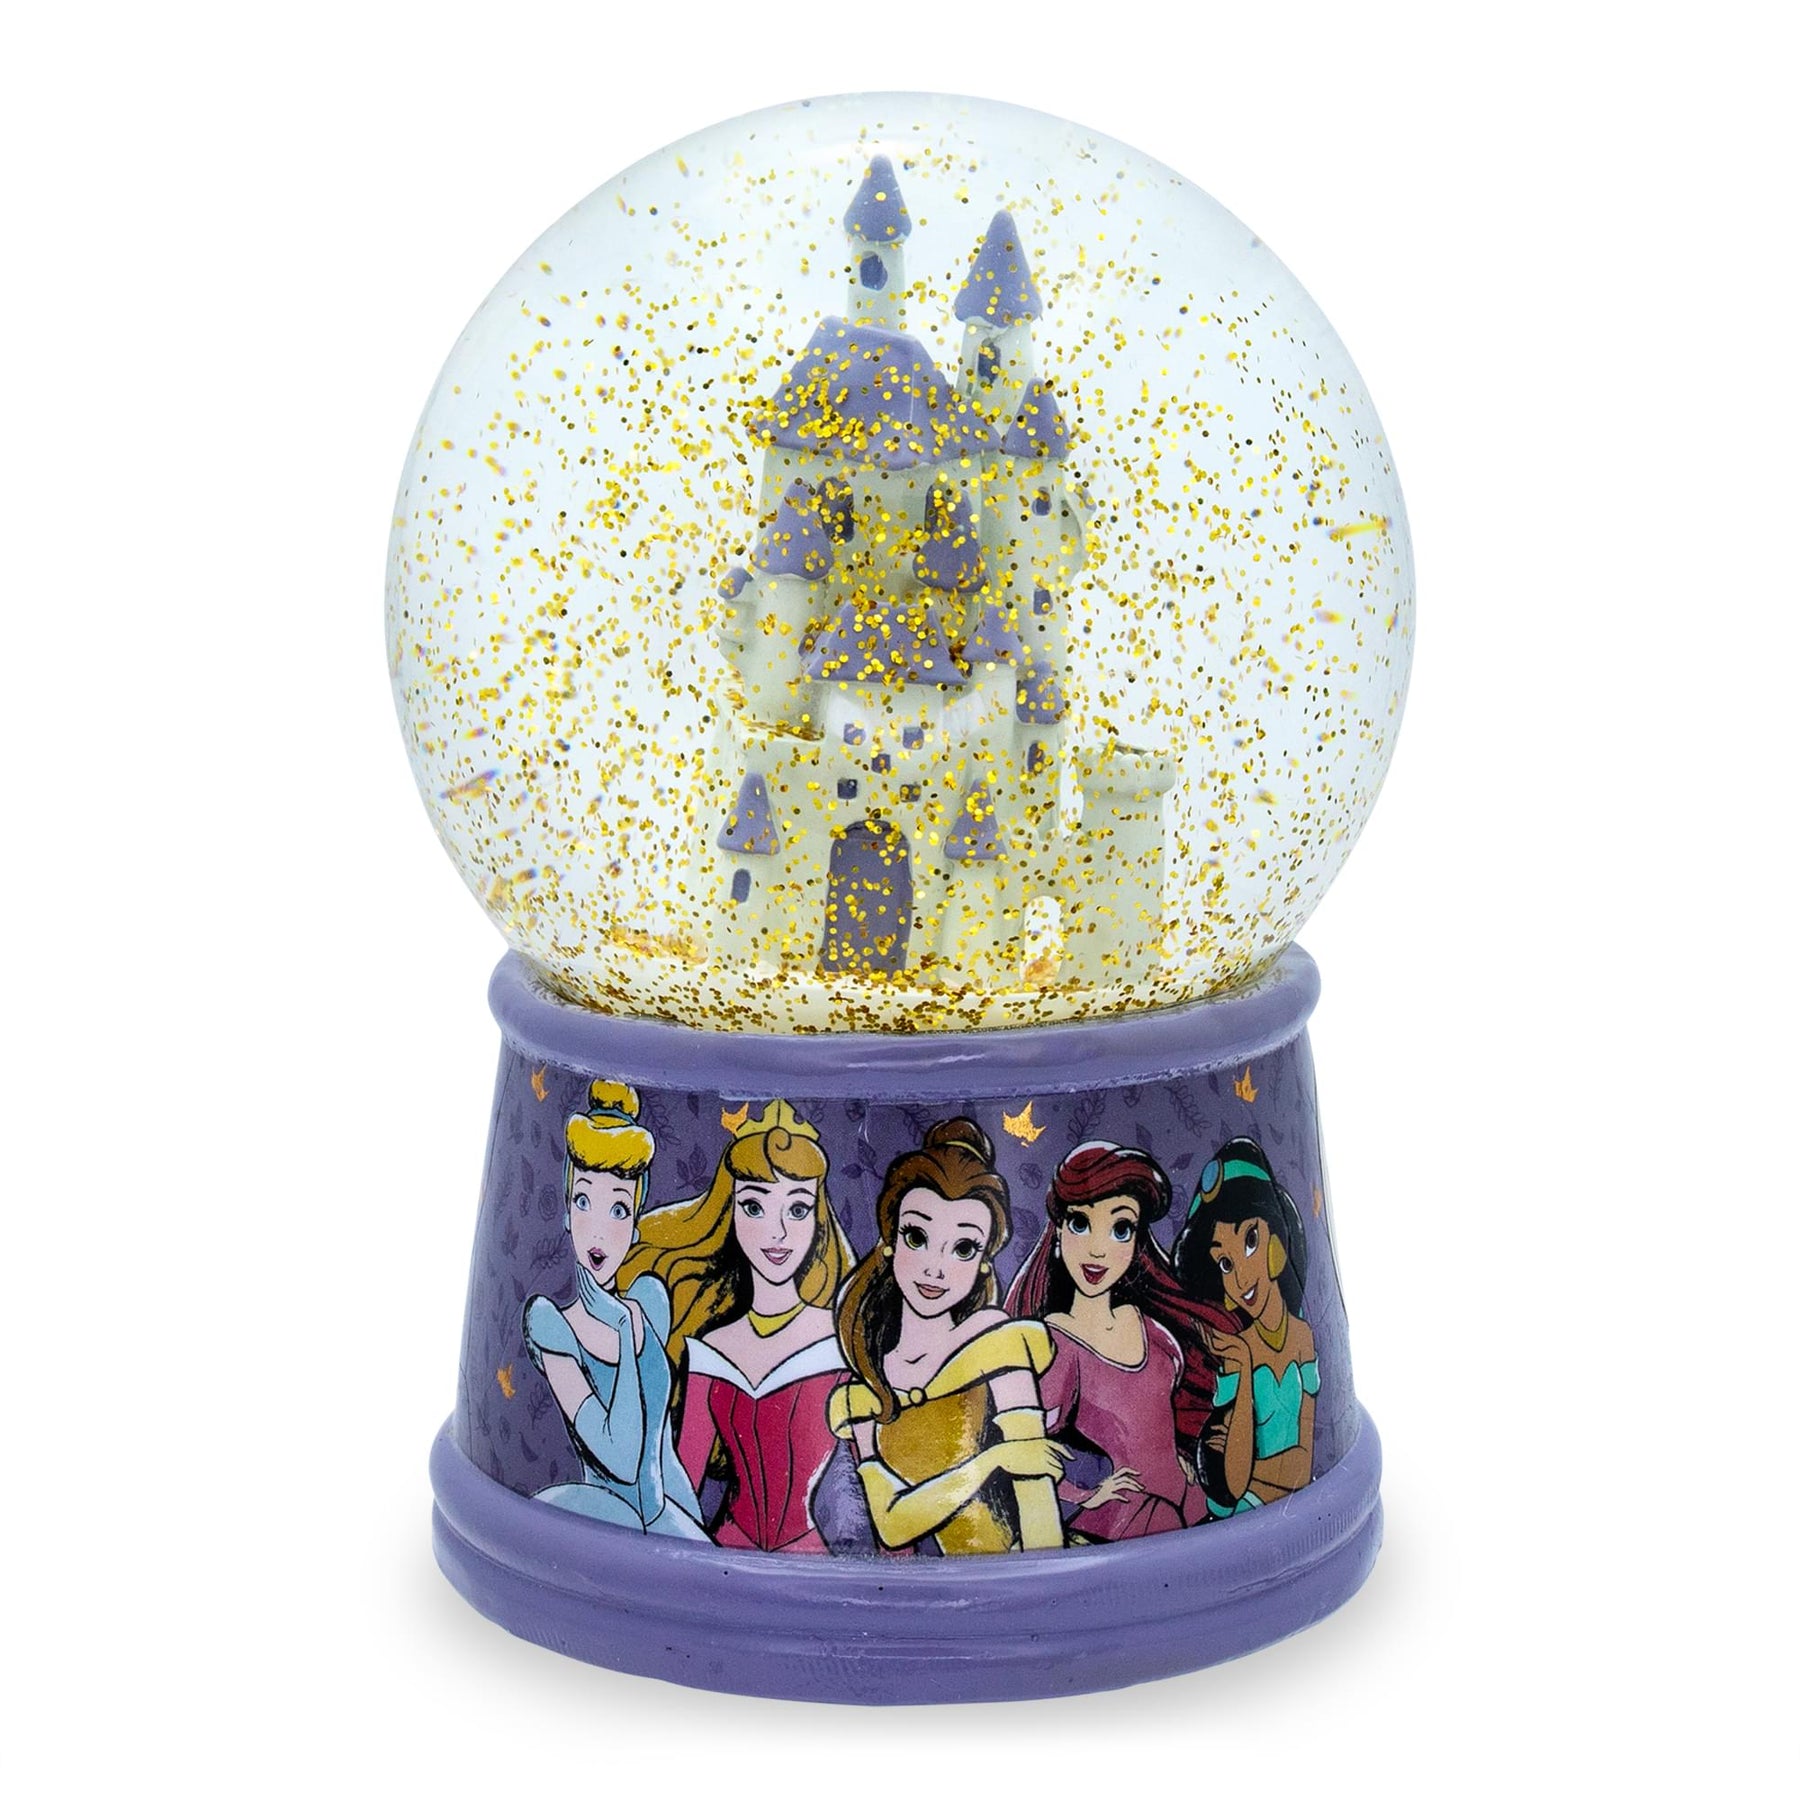 Lot of 2, Disney's “Stitch”. Make Your Own Snow Globes Set. BNWT